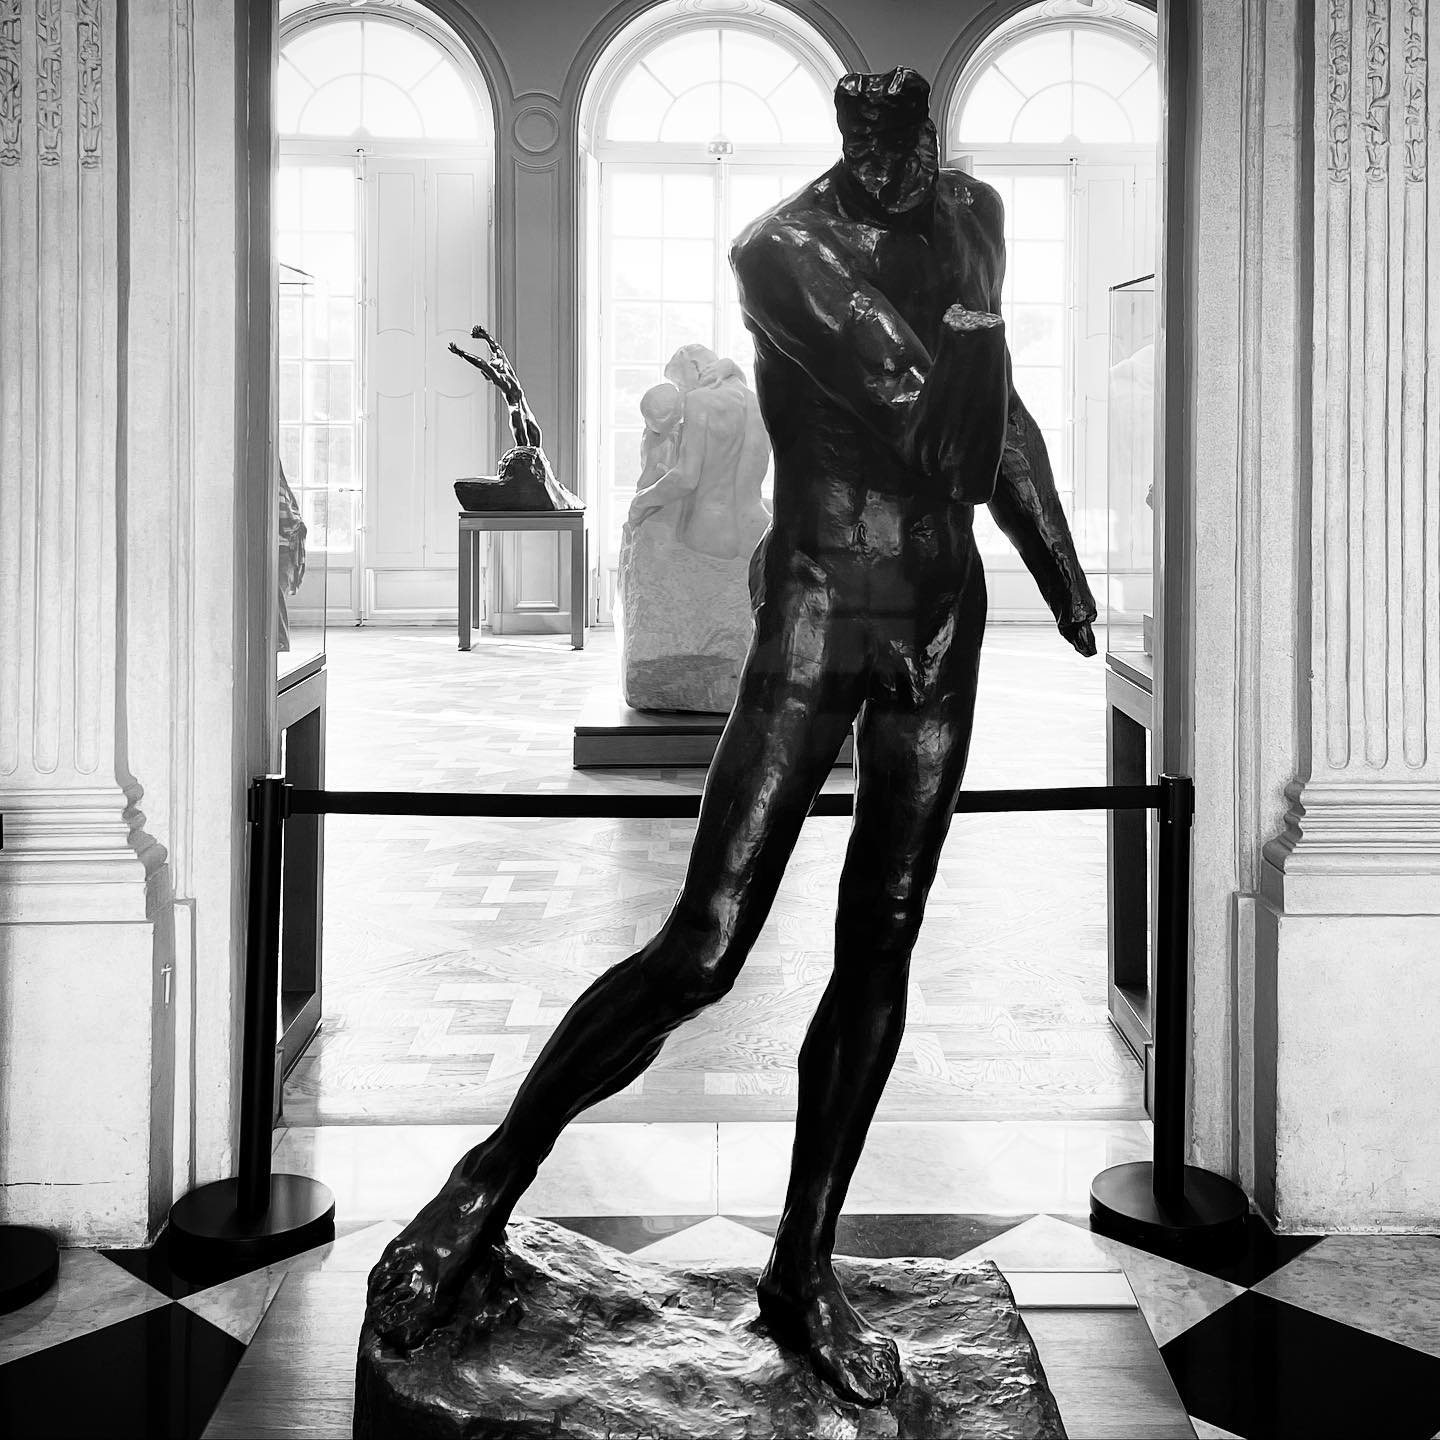 The beauty and fragility of Rodin’s artwork
.
.
.
.
.
#rodin #augustrodin #paris #blackandwhite #blackandwhitephotography #elegance #style #beauty #photography #inspiration #ivanmeade